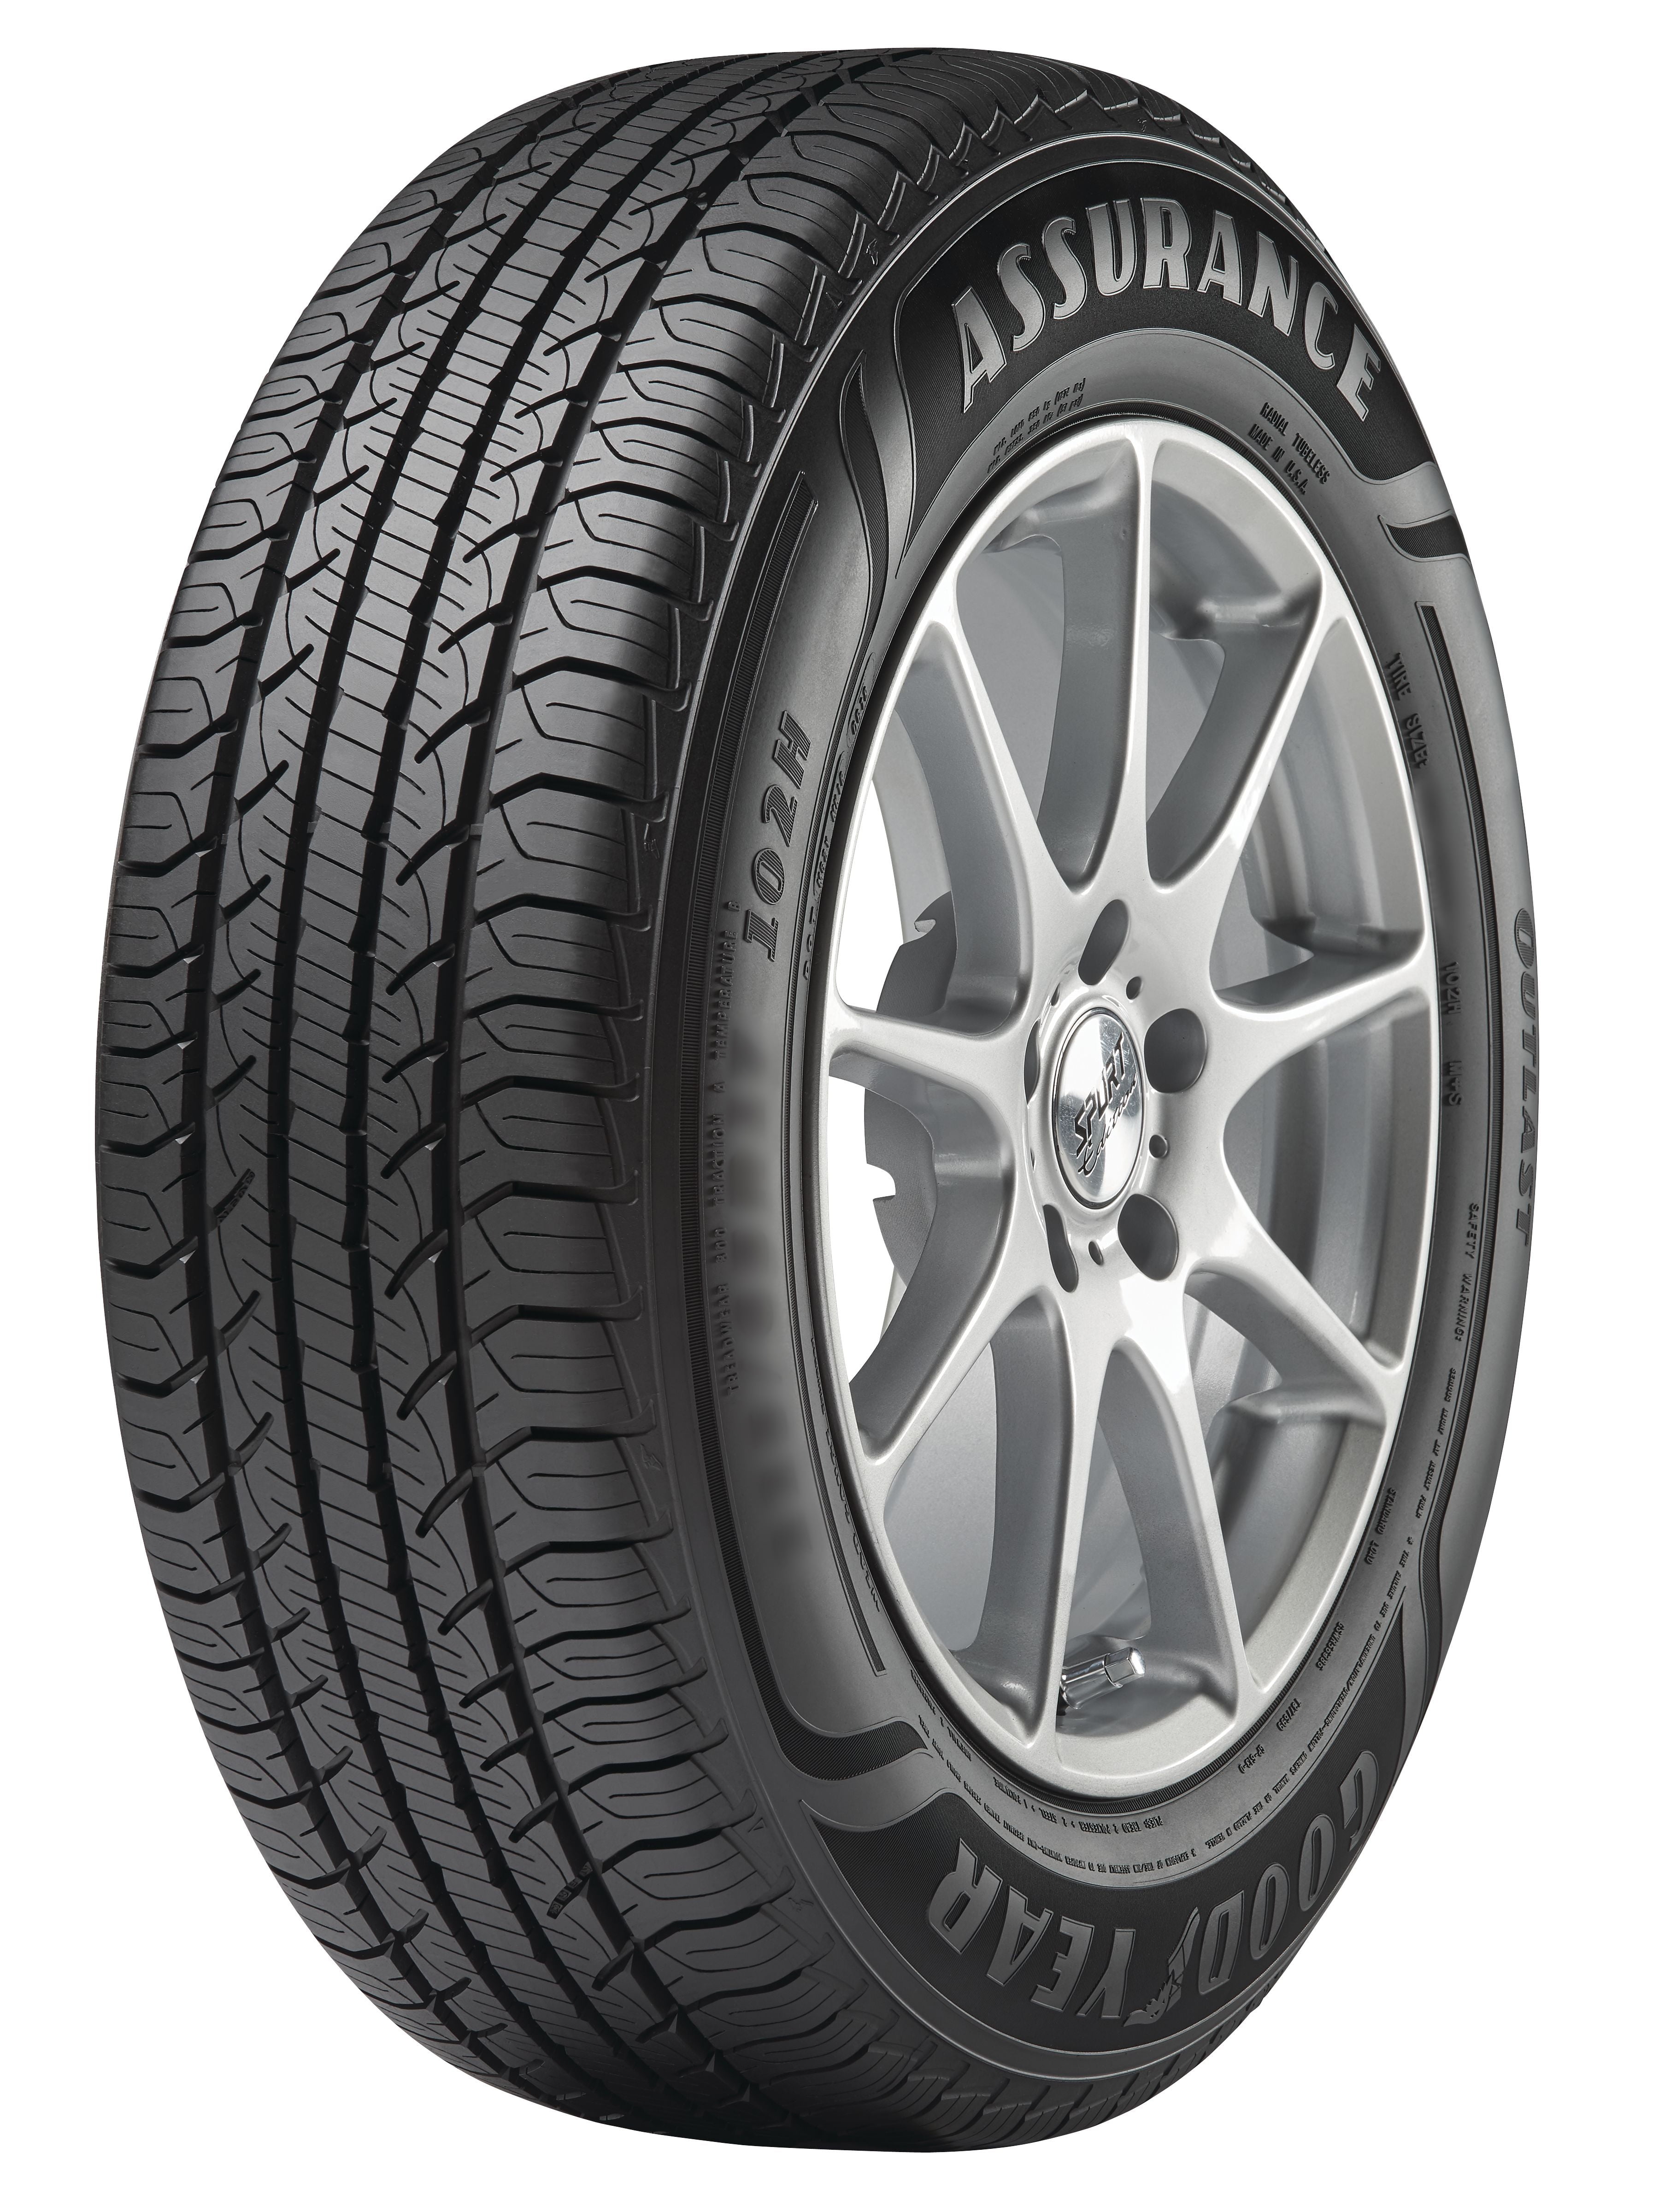 Goodyear Assurance Outlast 235/65R18 106V All-Season Tire